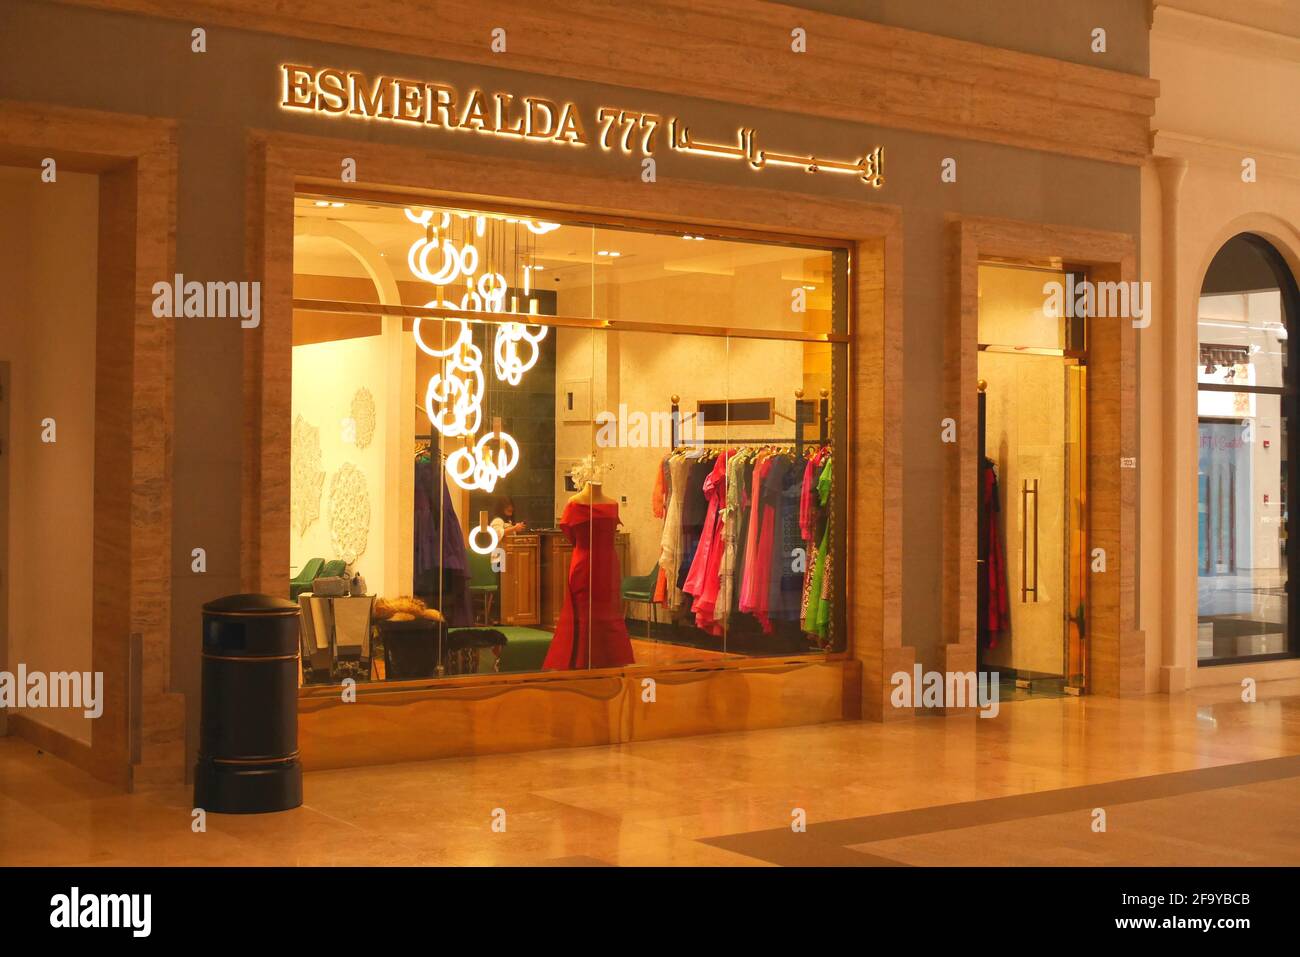 Esmeralda 777 clothing store, The Avenues Mall, Manama, Kingdom of Bahrain Stock Photo